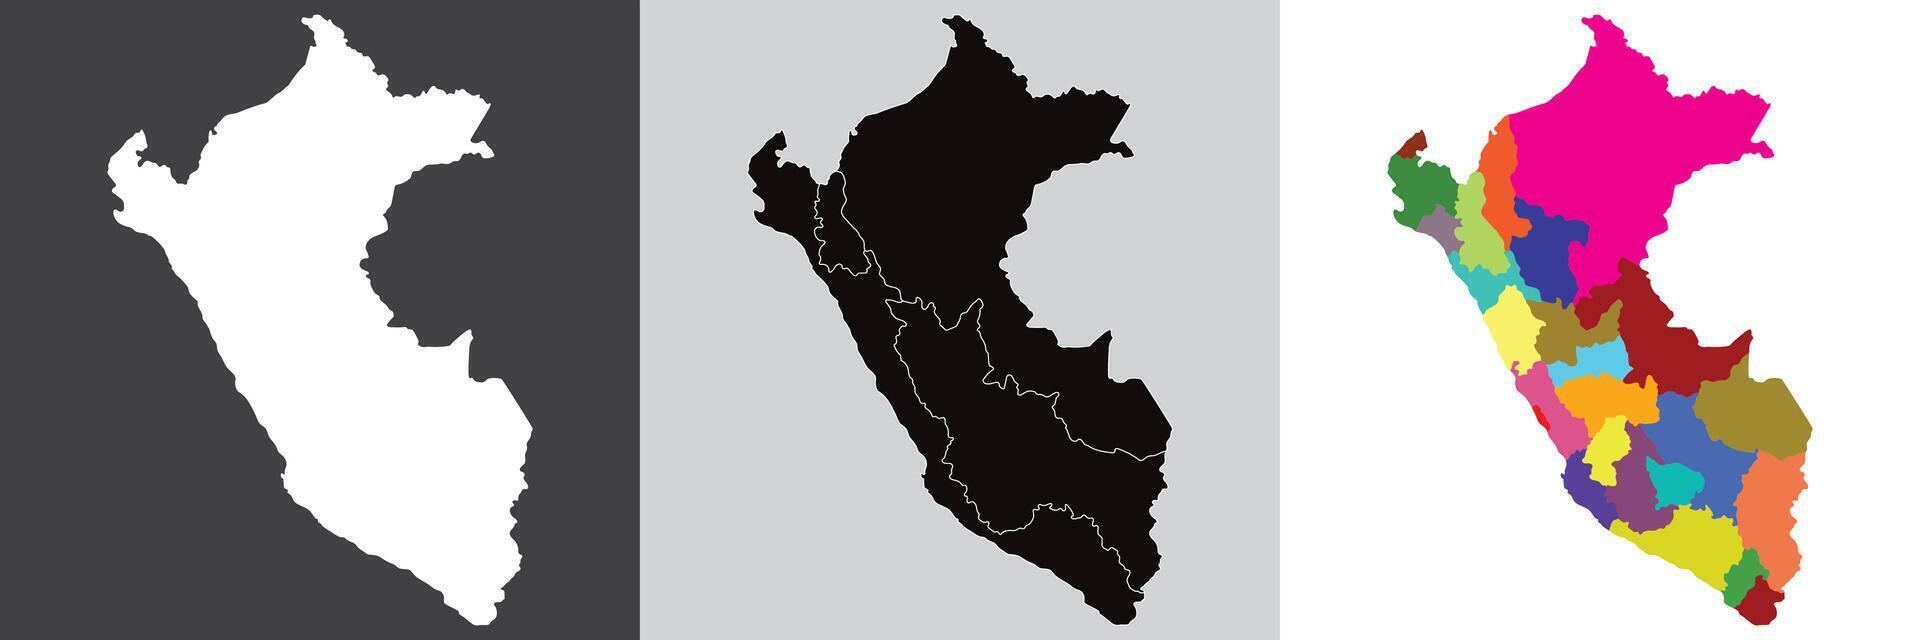 Peru mapa. mapa do Peru dentro conjunto vetor